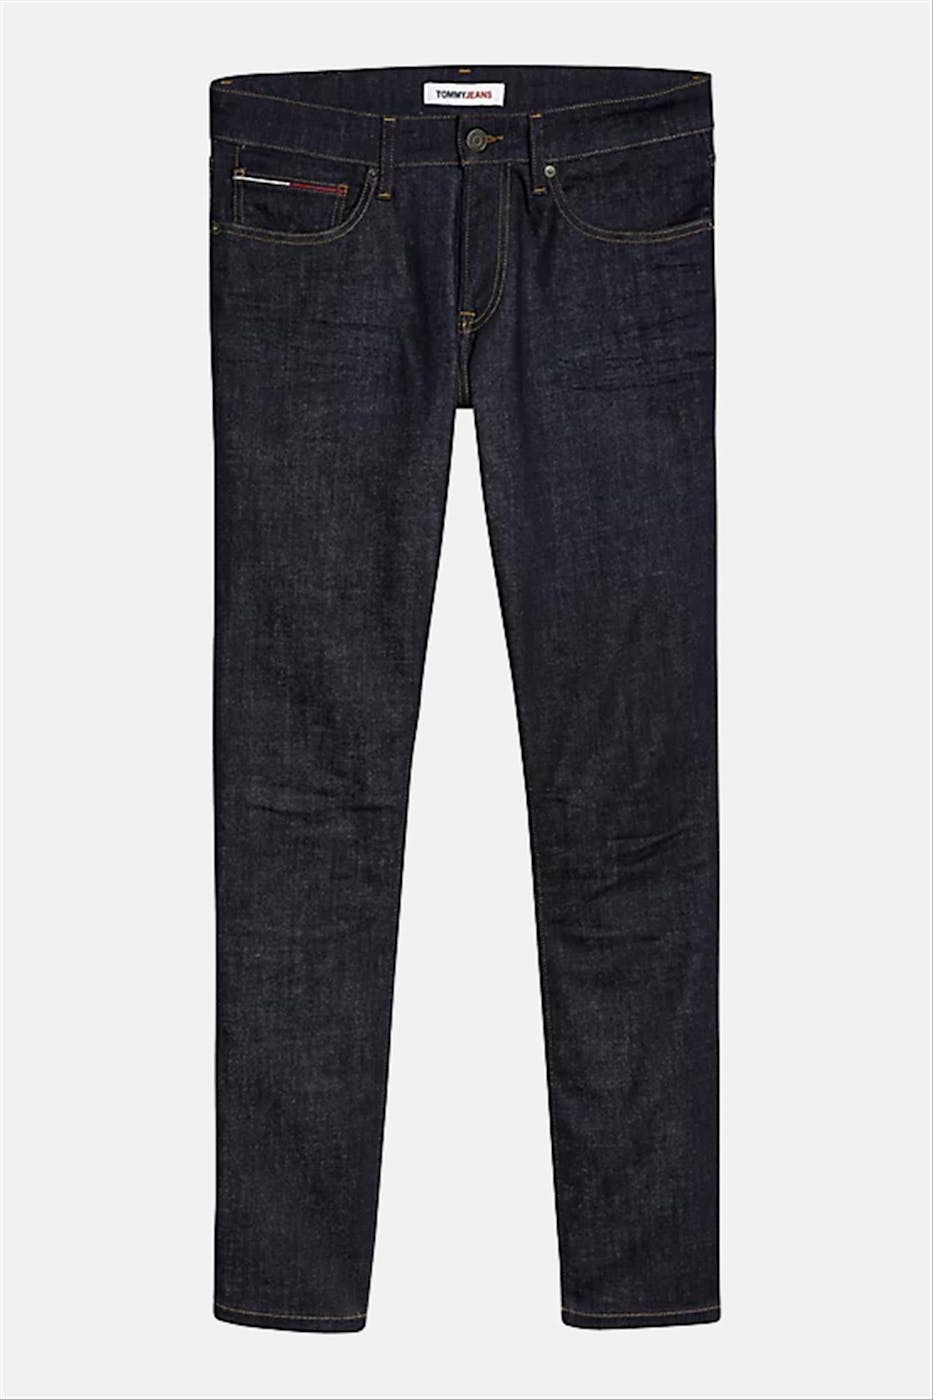 Tommy Jeans - Blauwe Scanton slim jeans